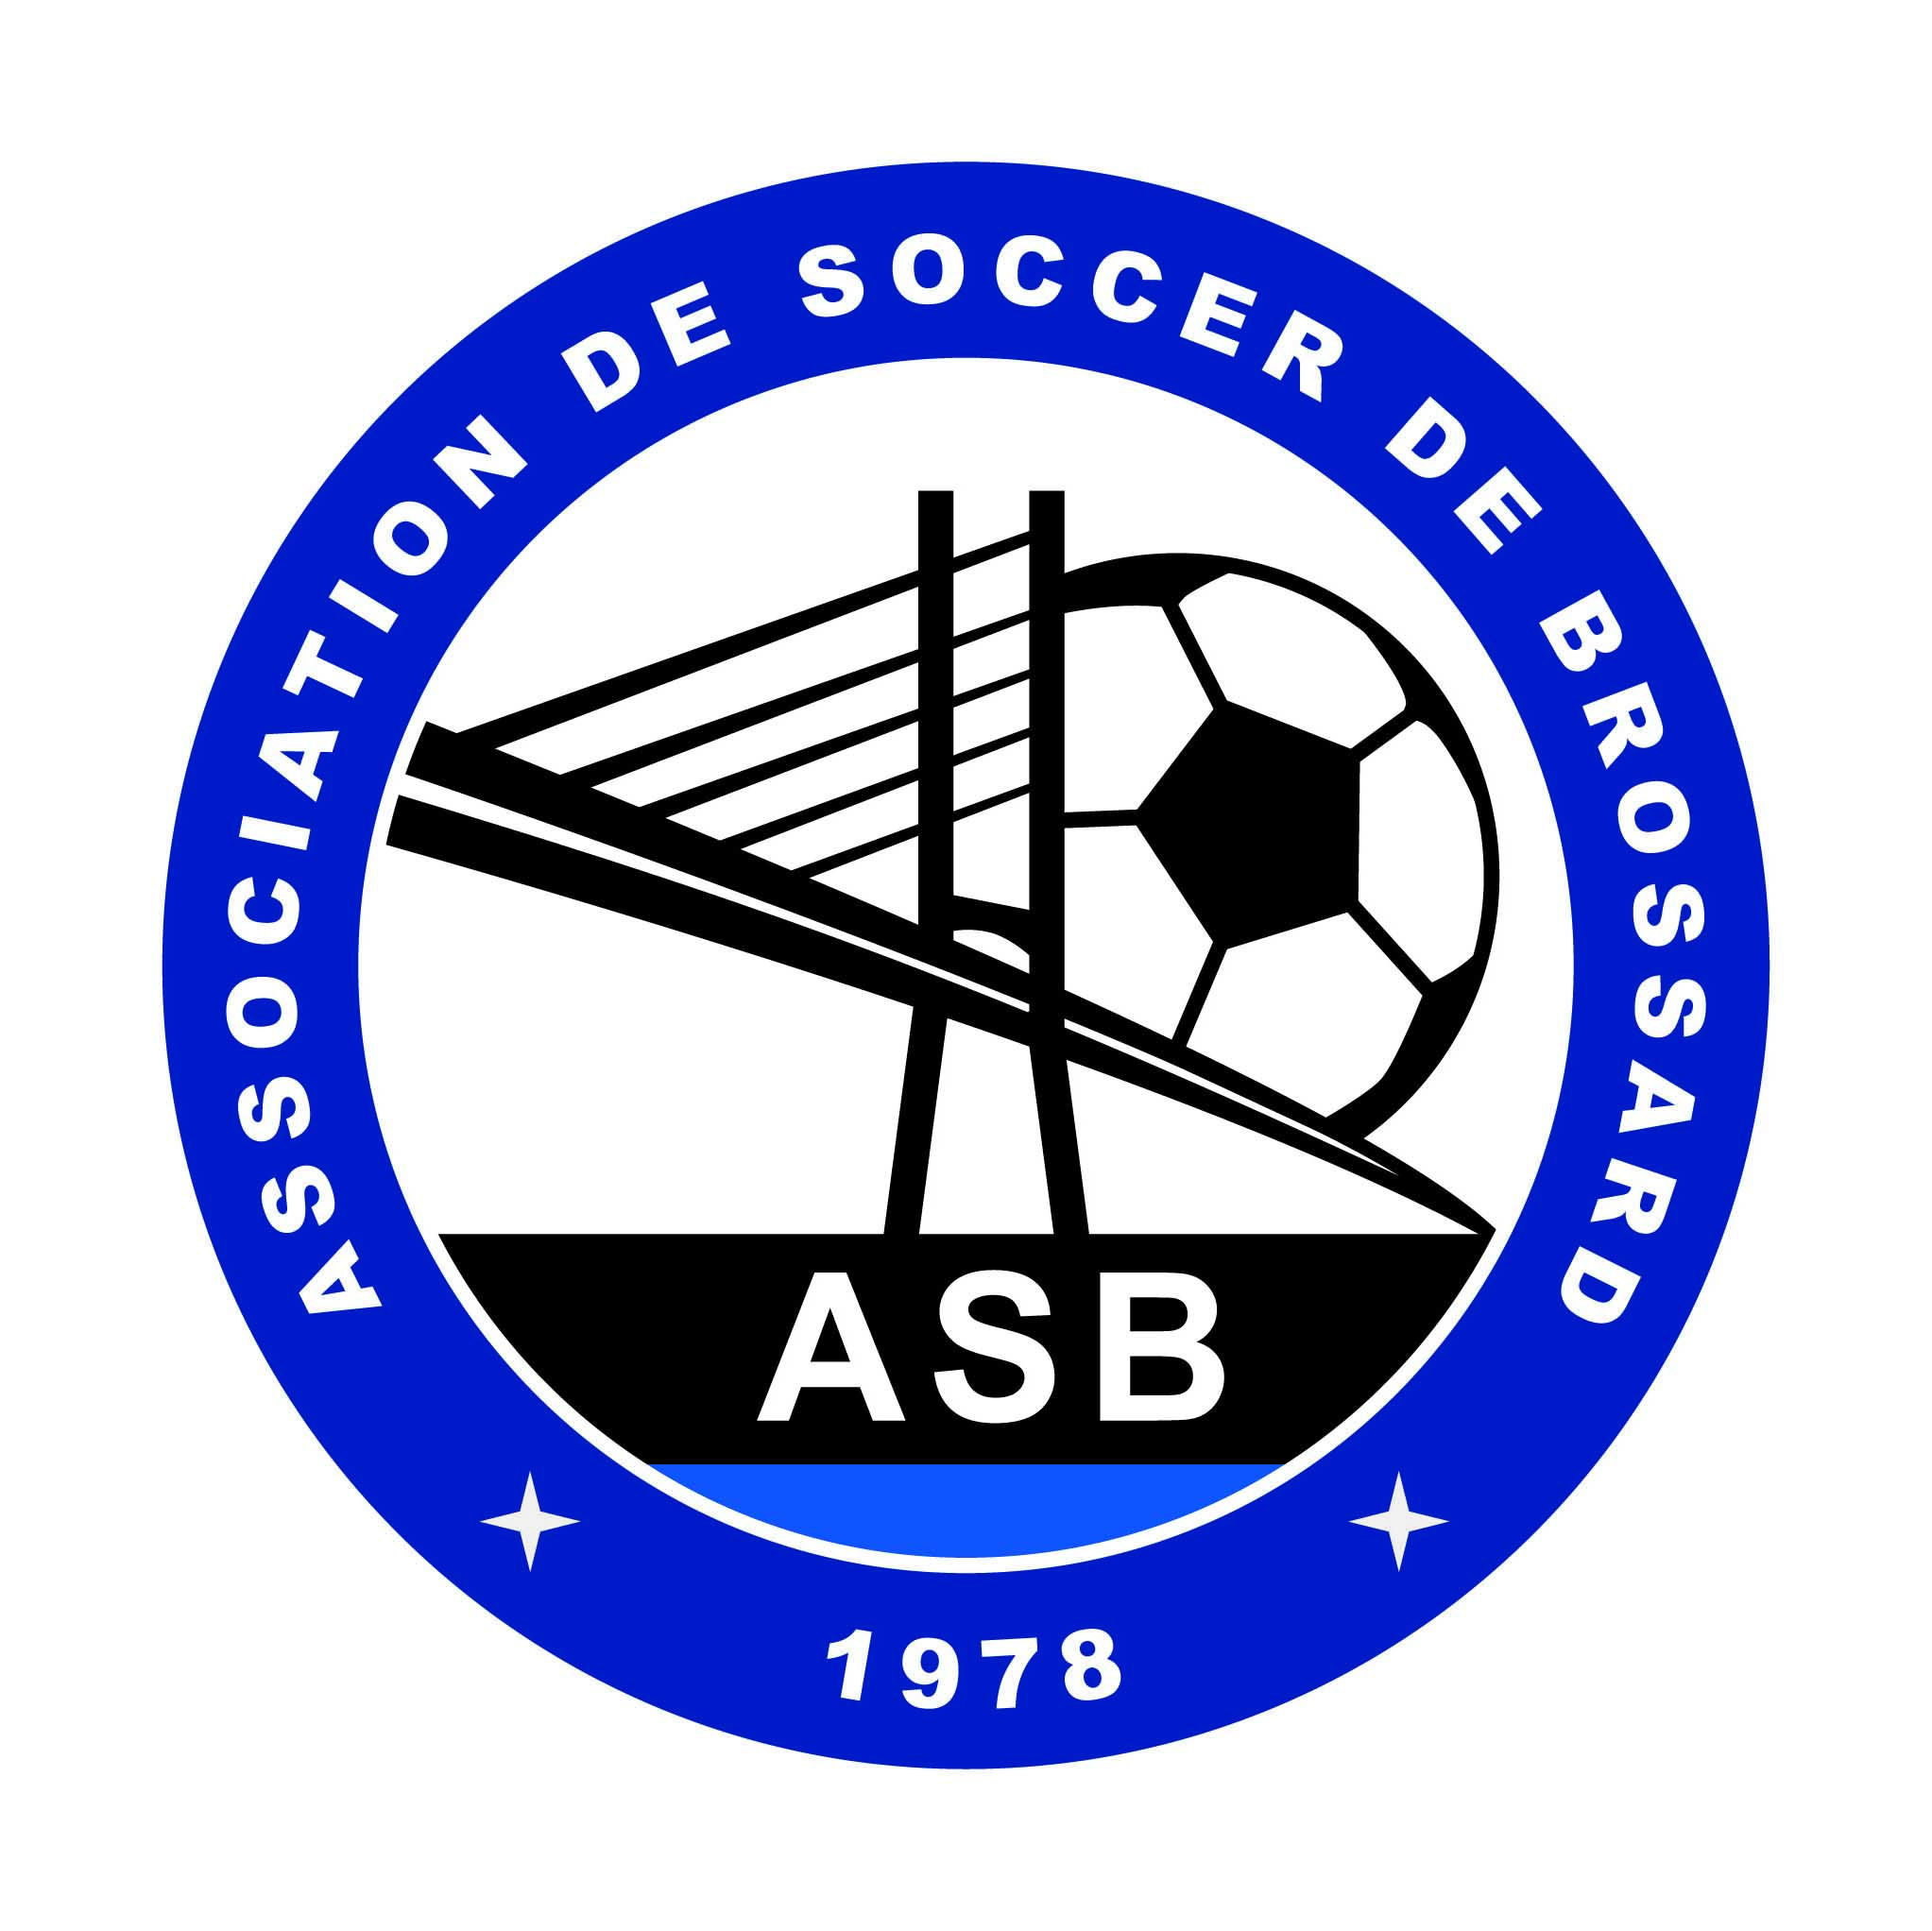 Association de Soccer de Brossard